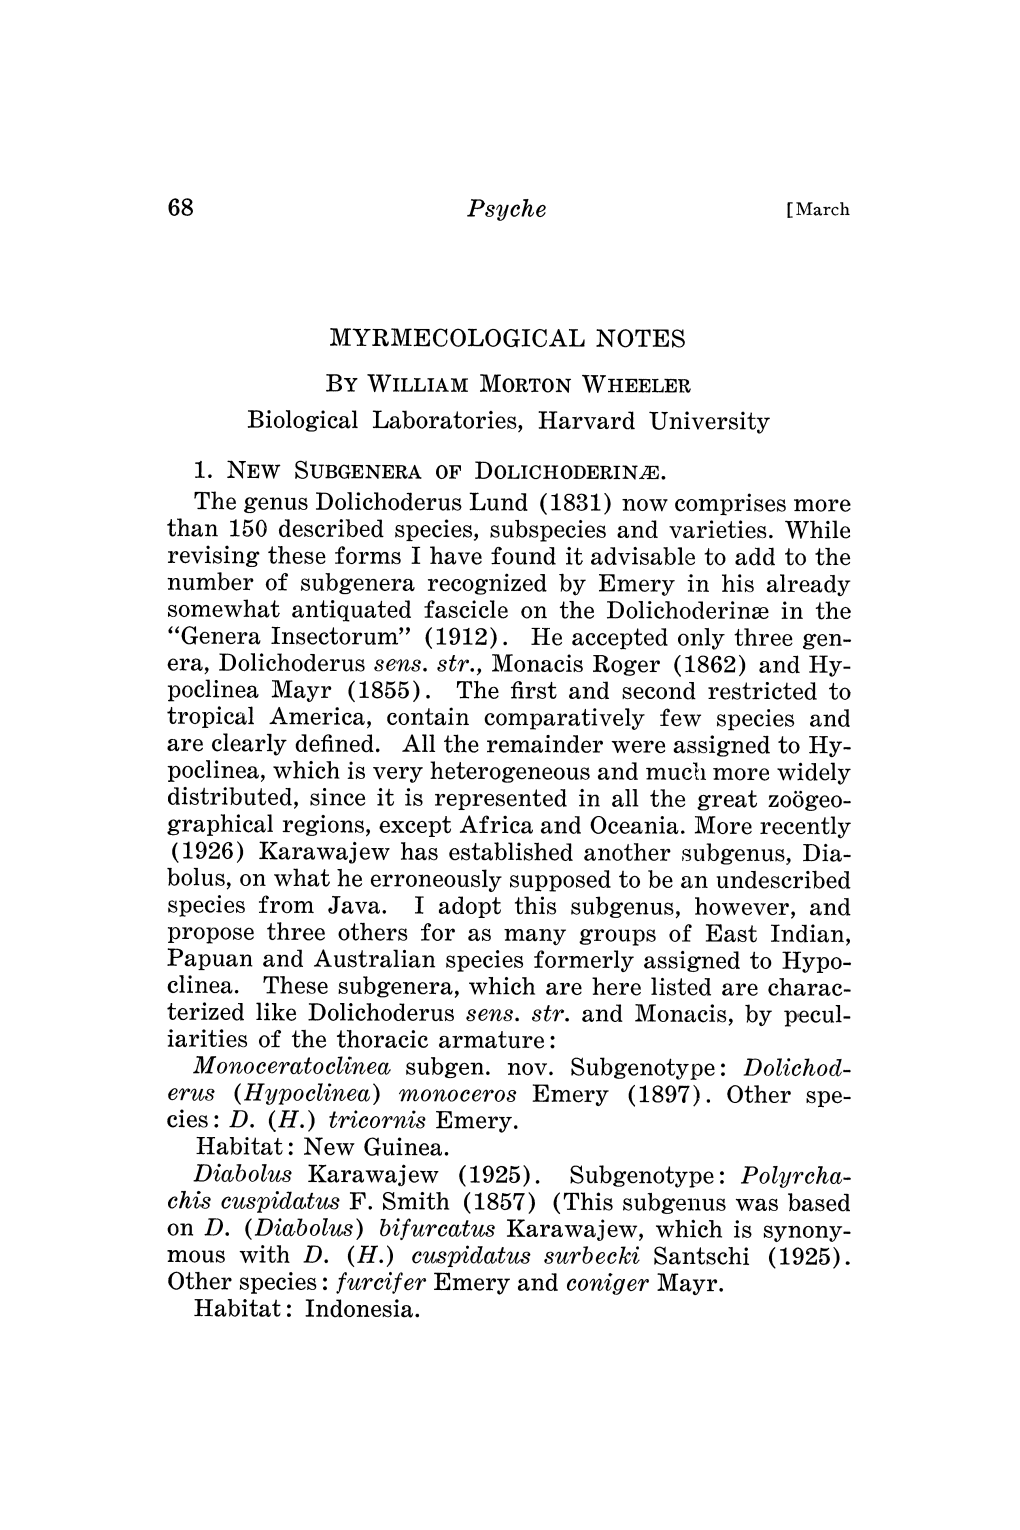 MYRMECOLOGICAL NOTES by WILLIAM MORTON WHEELER Biological Laboratories, Harvard University